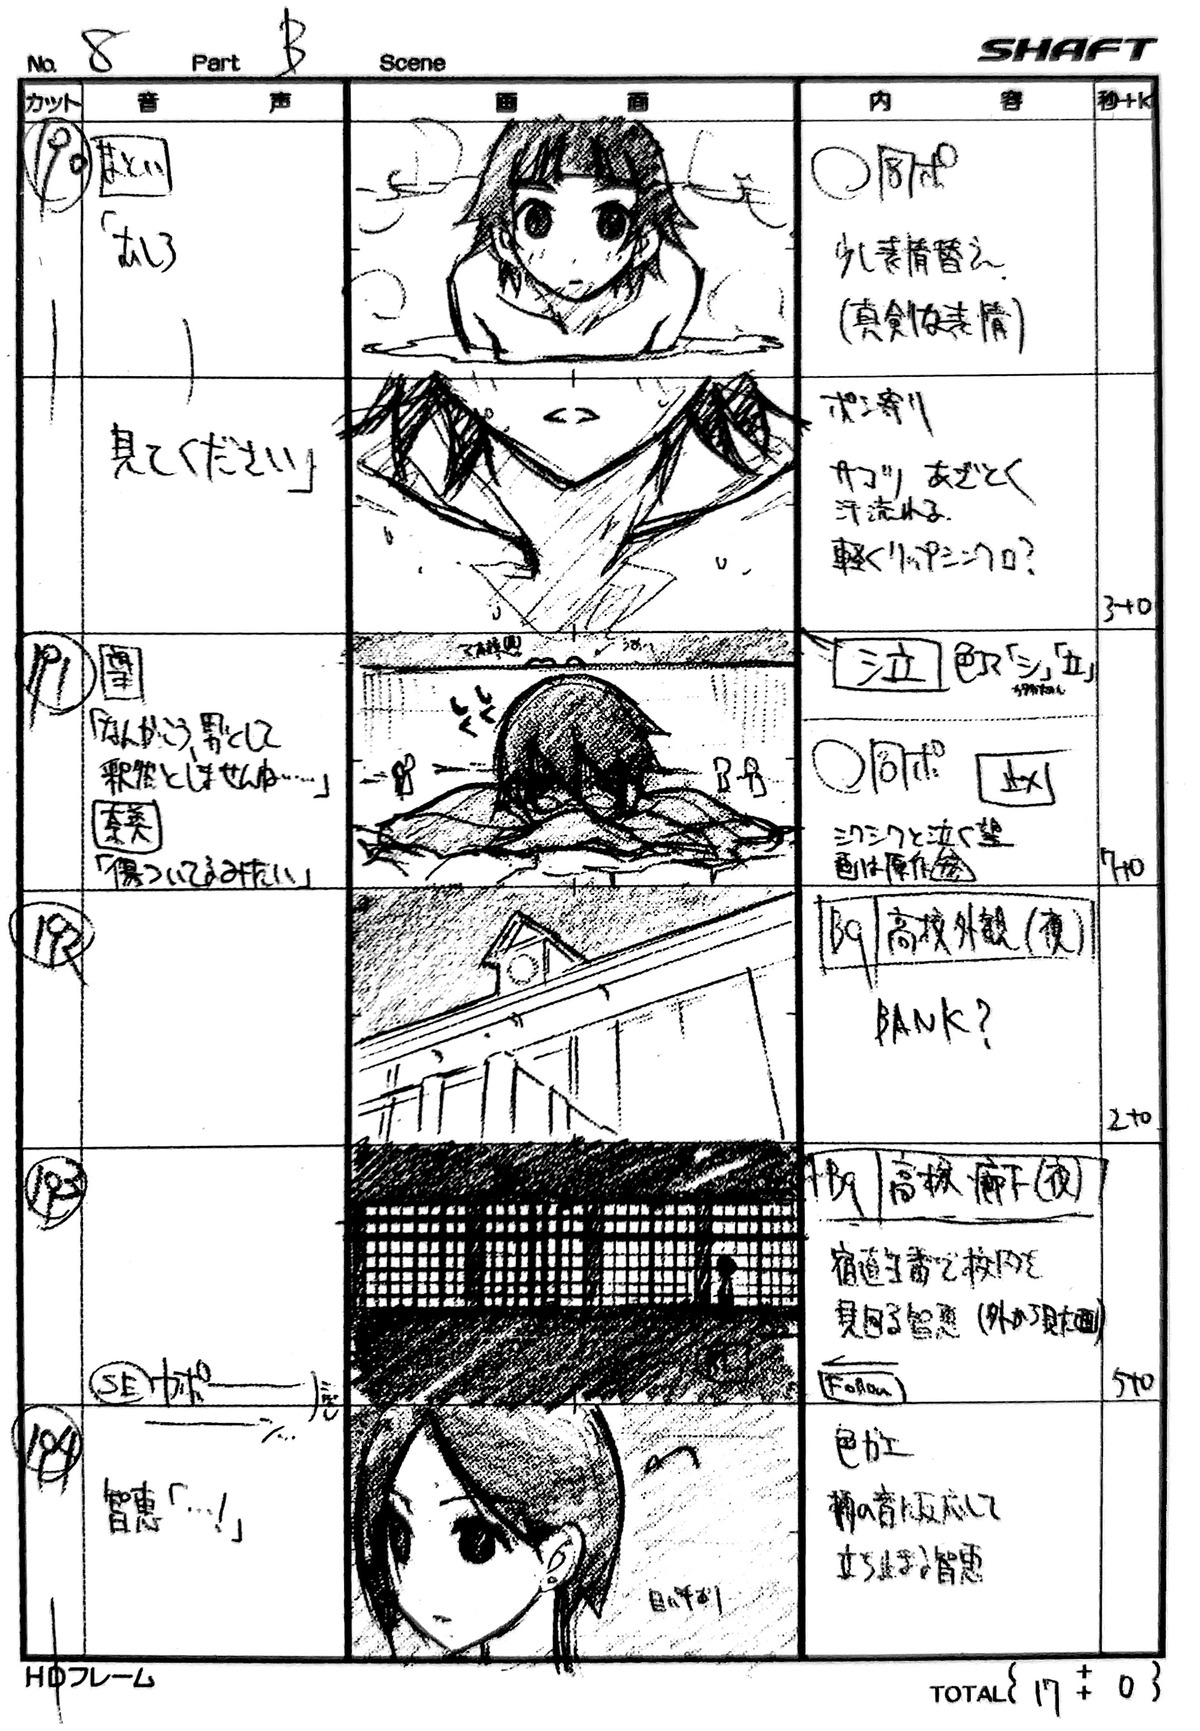 hiroki_yamamura production_materials sayonara_zetsubou_sensei storyboard